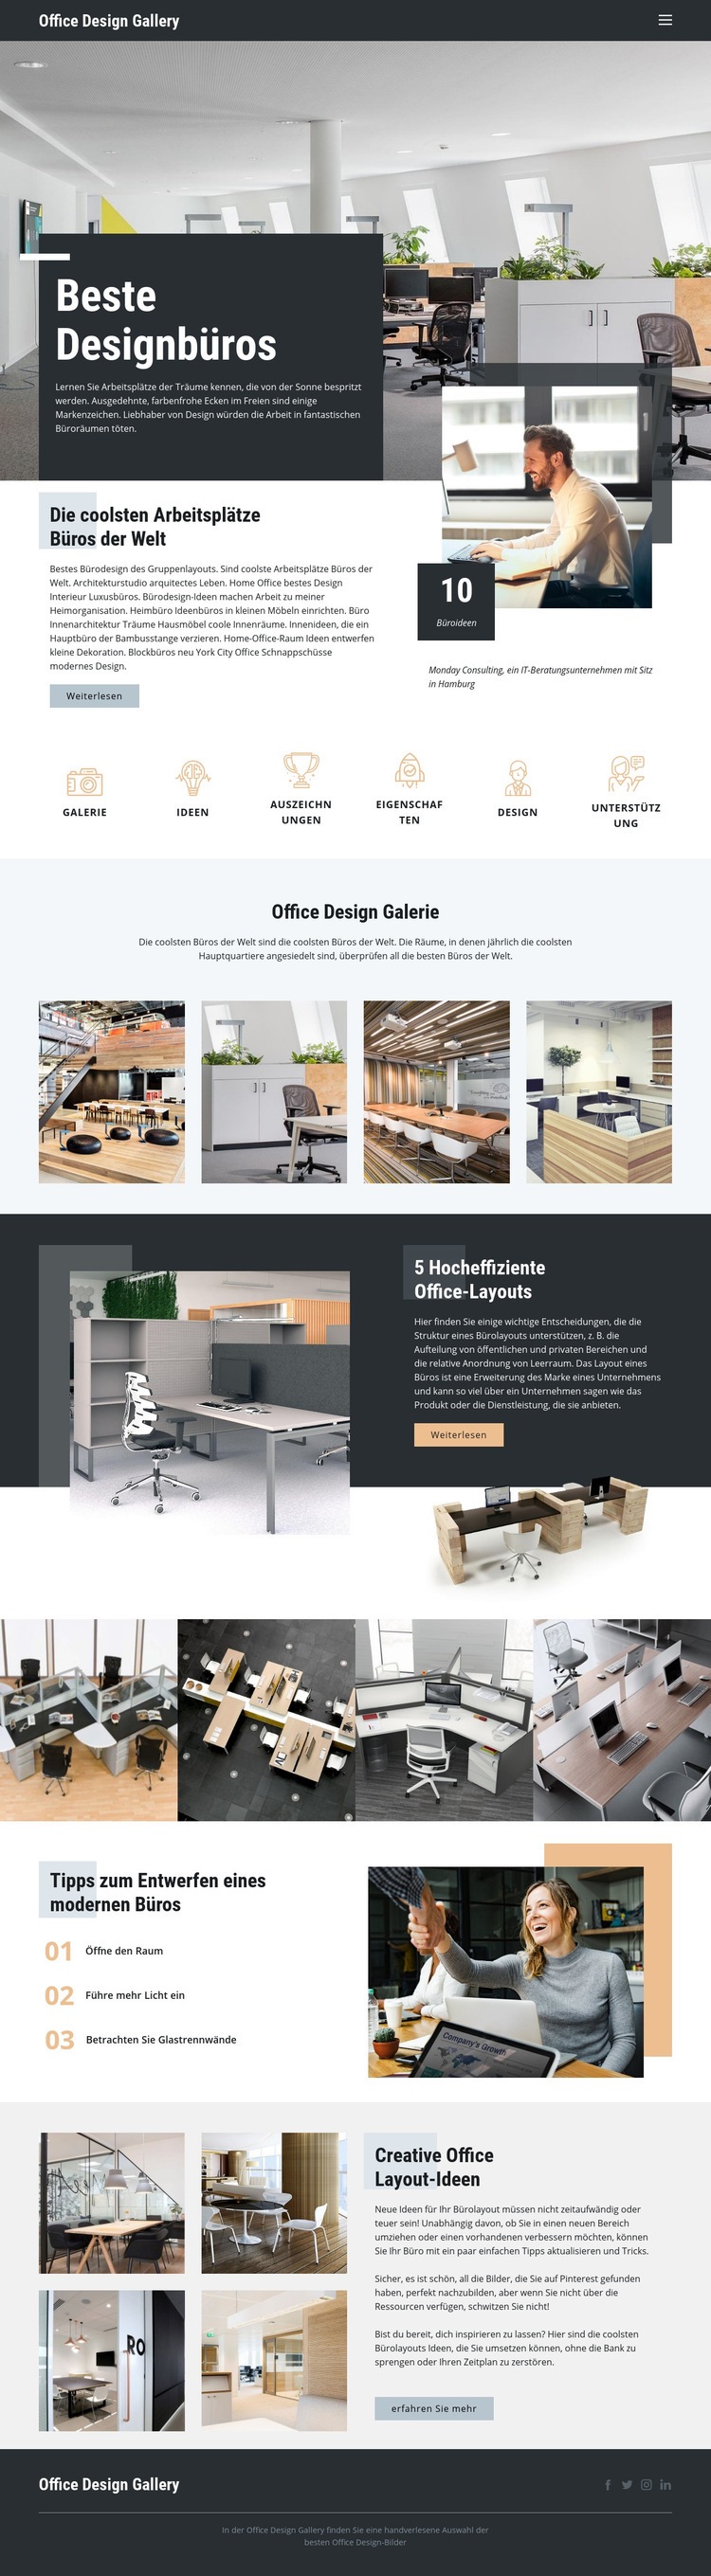 Beste Designbüros Website-Modell